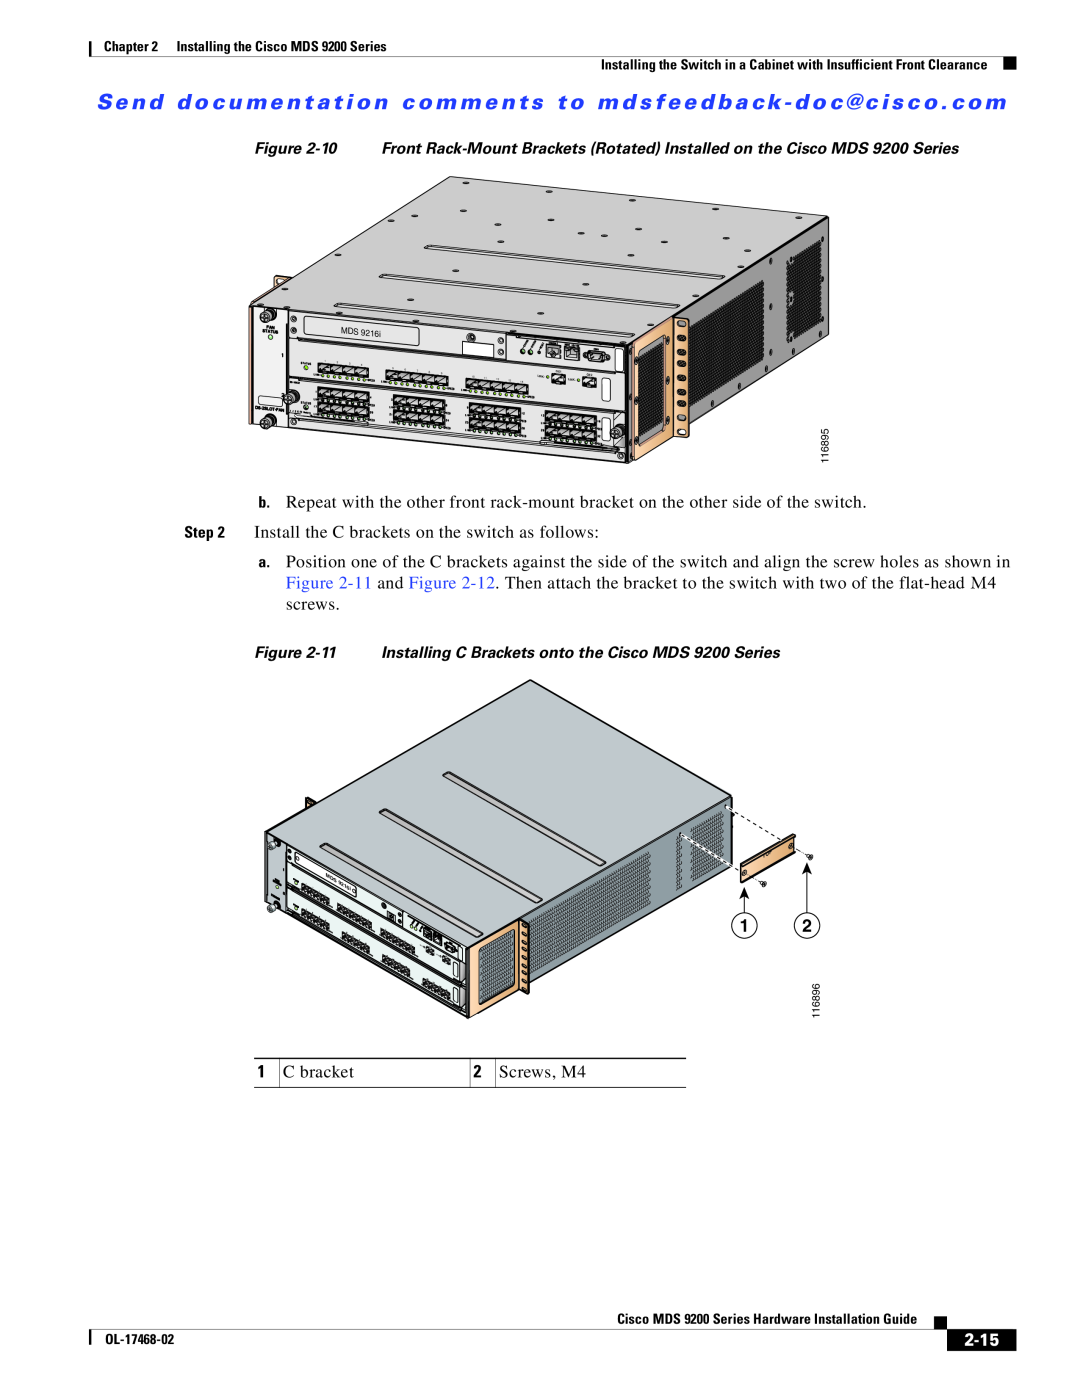 Cisco Systems manual 2-15, 11 Installing C Brackets onto the Cisco MDS 9200 Series, 9216i 